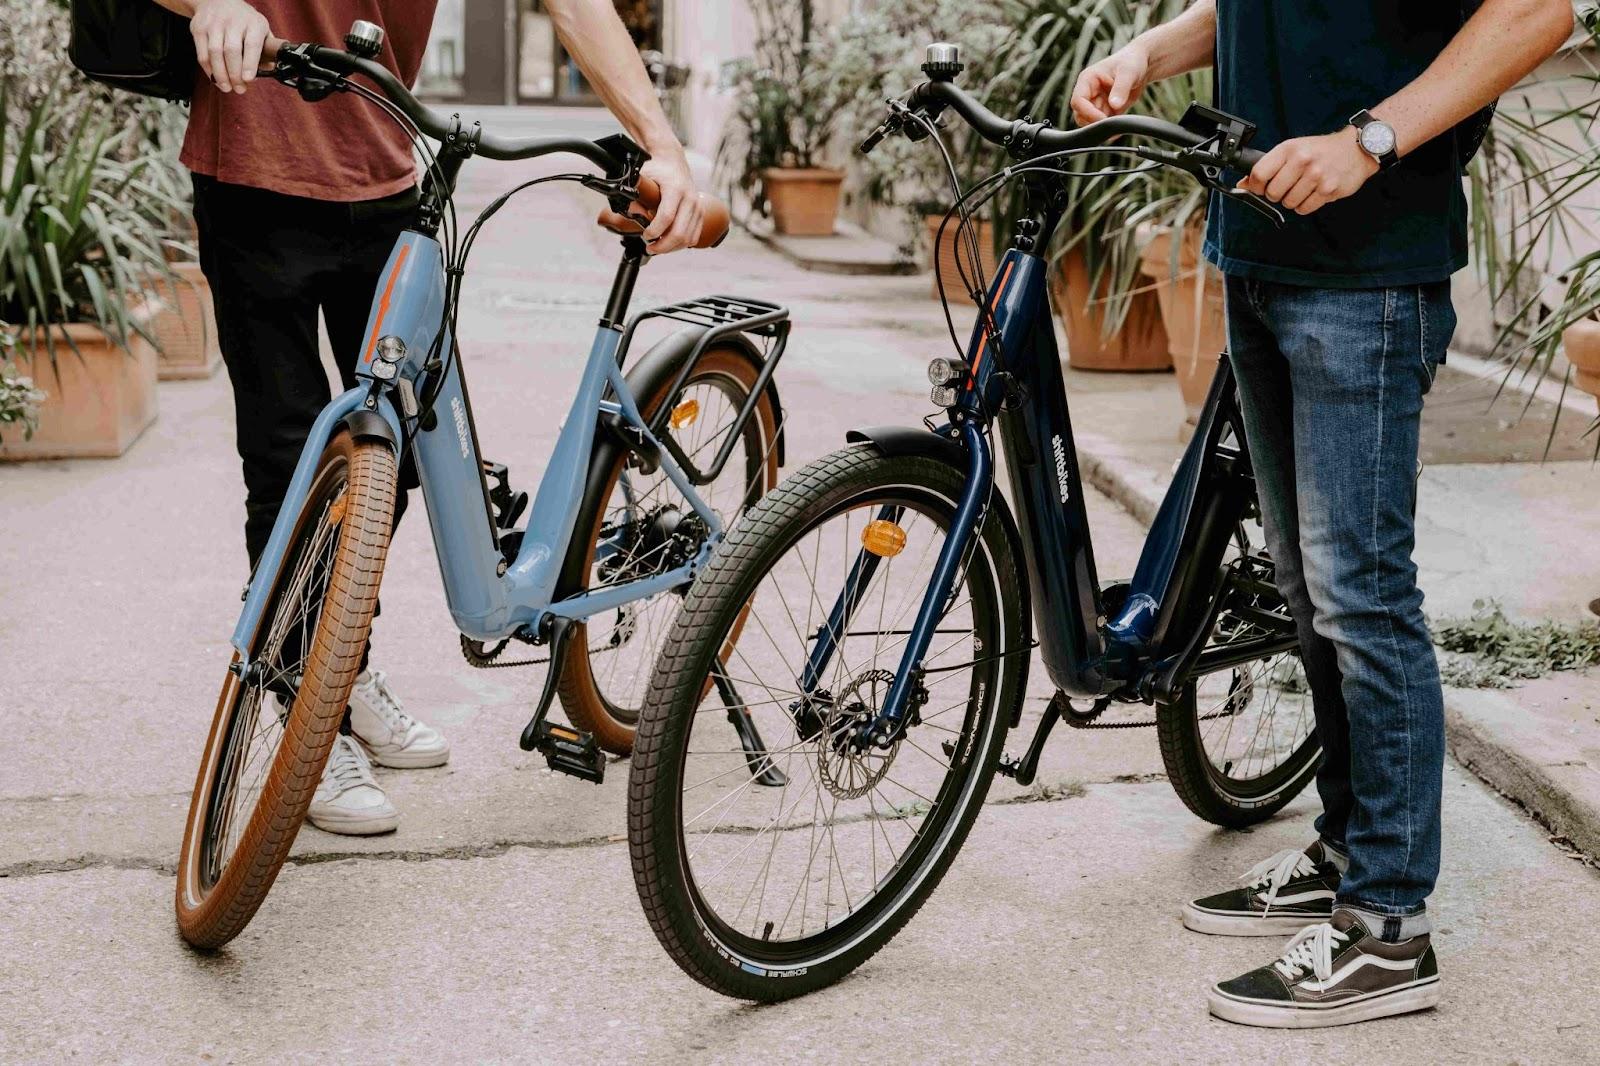 Bikes on a street in Paris